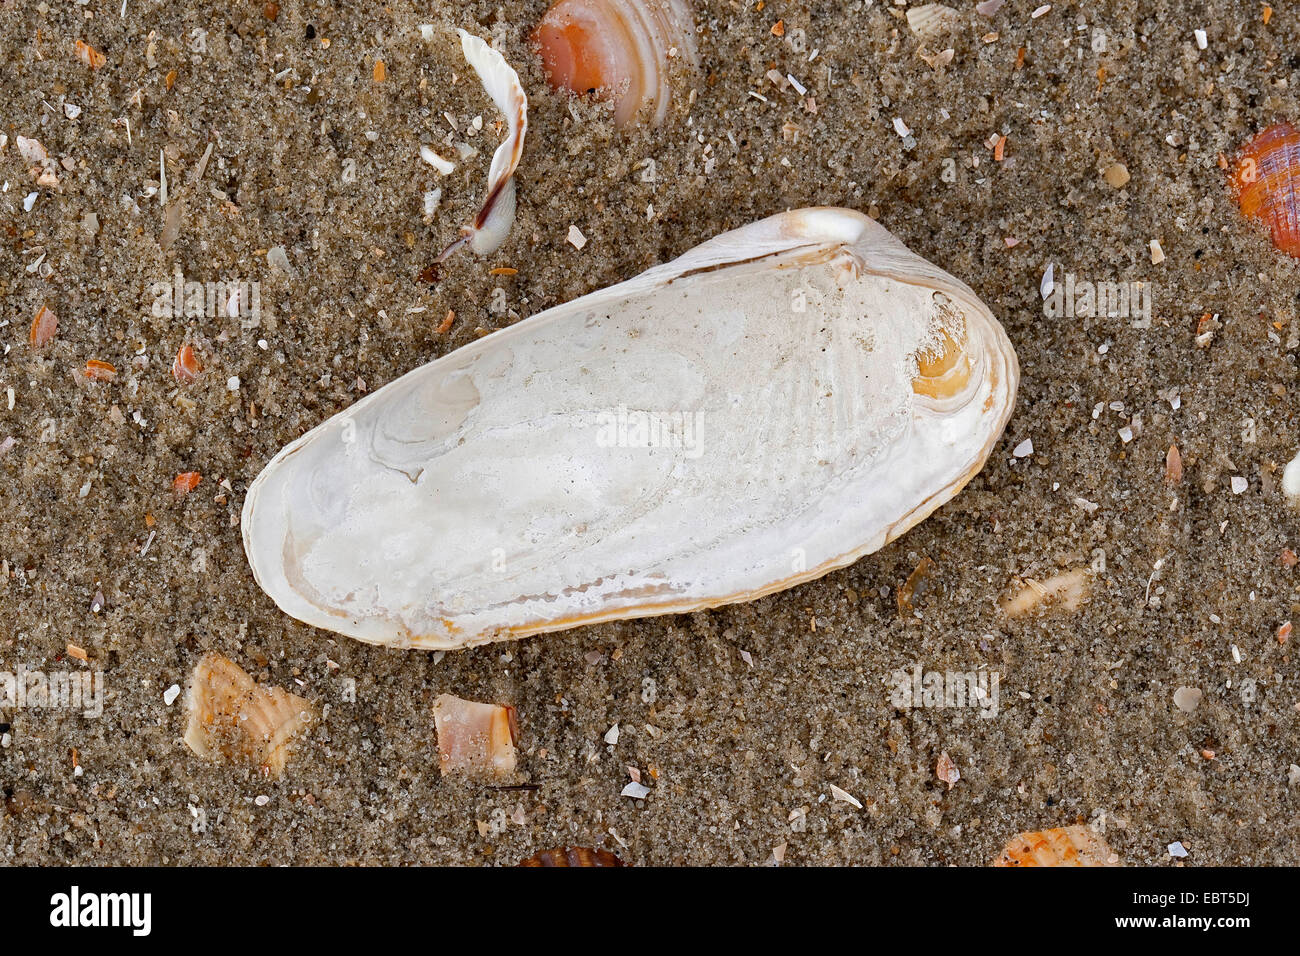 American piddock, false angelwing (Petricola pholadiformis, Petricolaria pholadiformis), shell on the beach, Germany Stock Photo